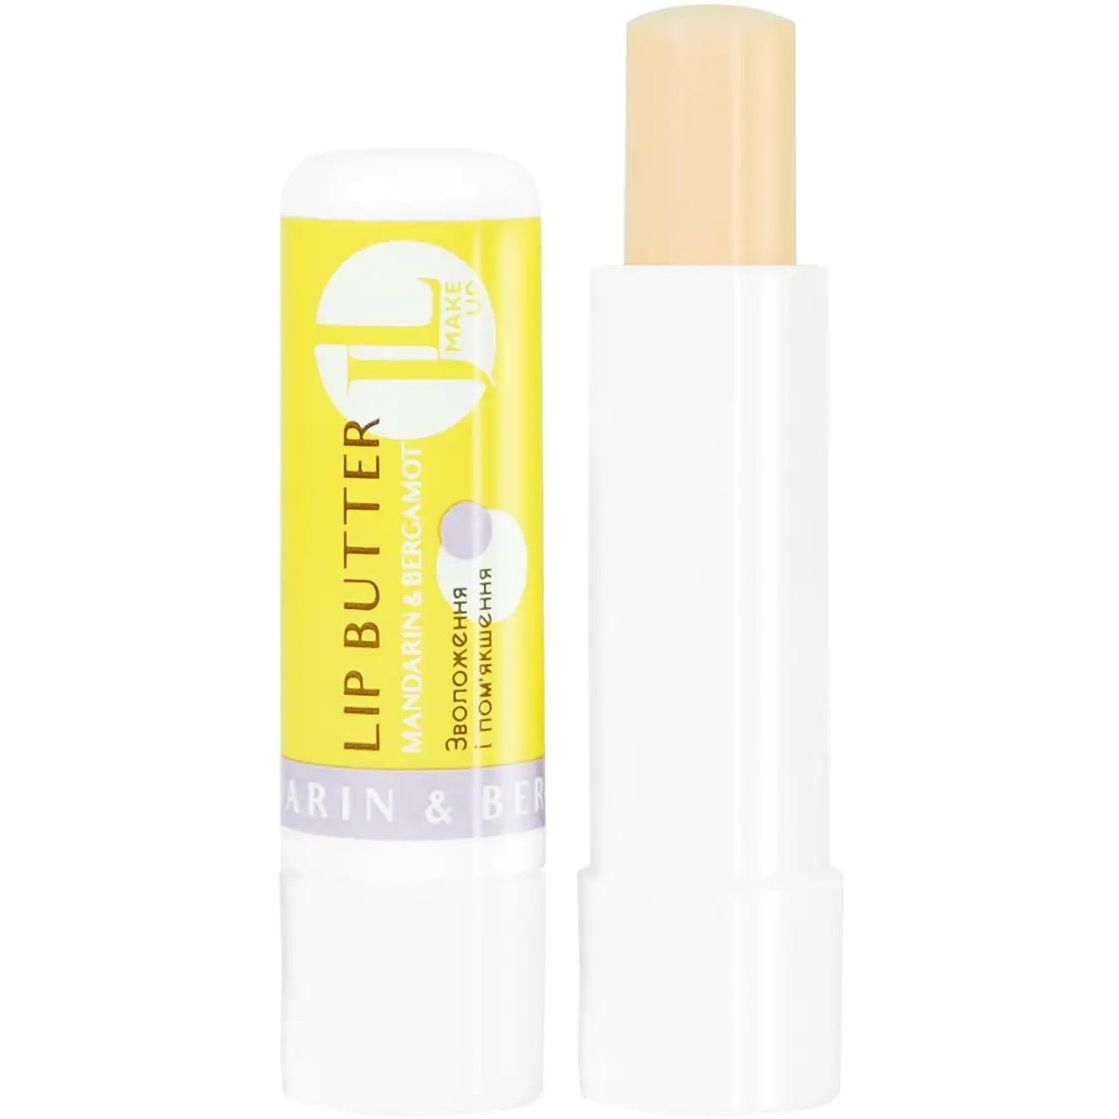 Бальзам-масло для губ Jovial Luxe Lip Butter тон 02 (Мандарин и бергамот) 4.5 г - фото 1